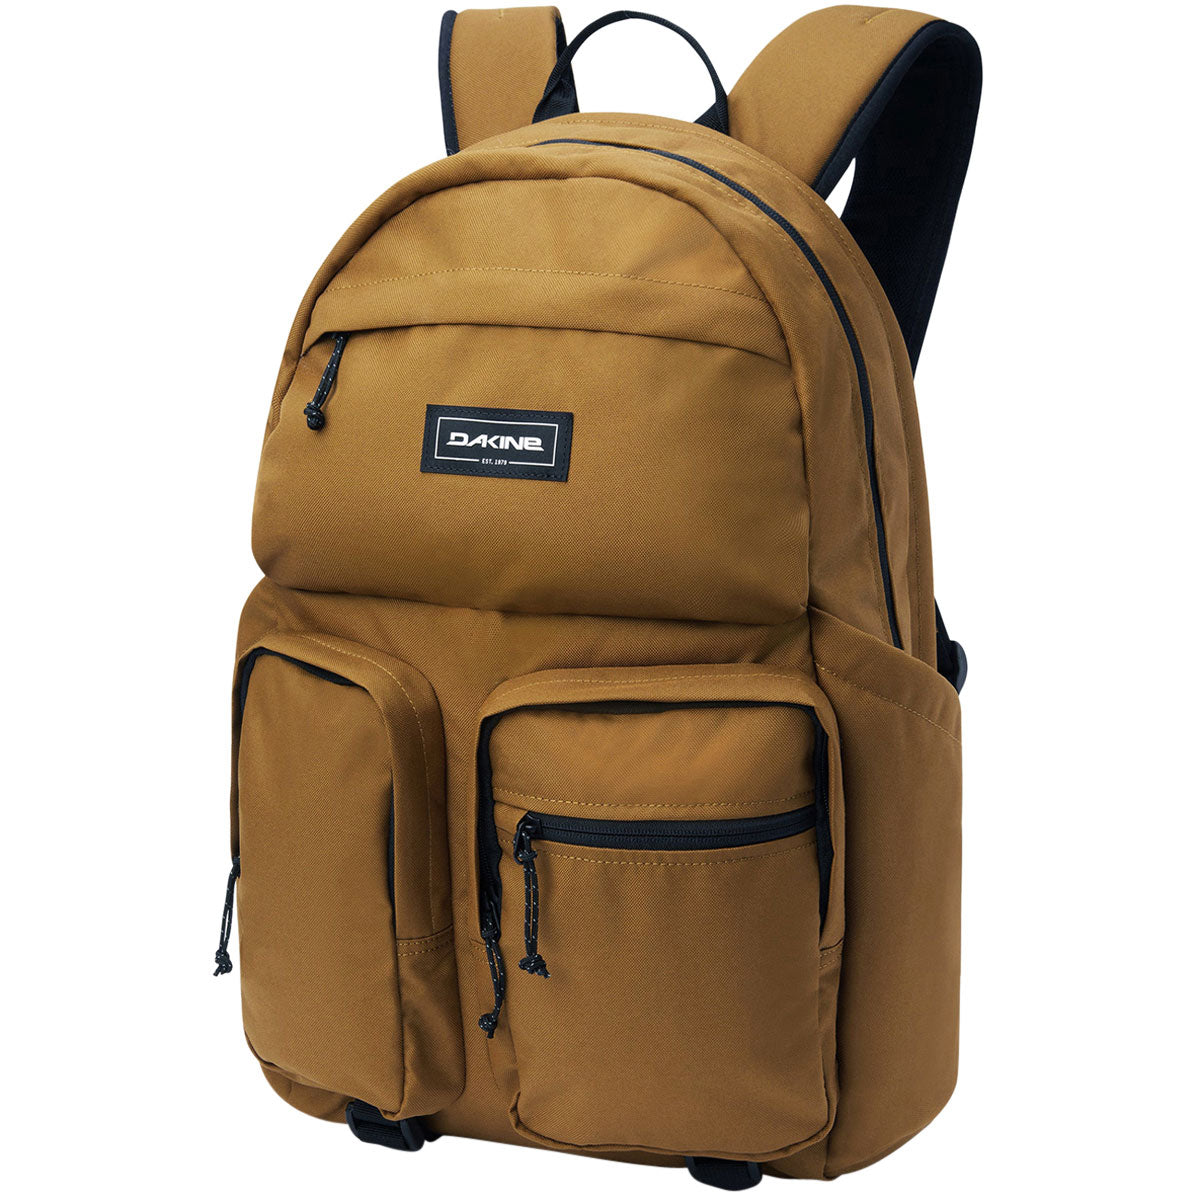 Dakine Method Deluxe 28L Backpack - Rubber image 1